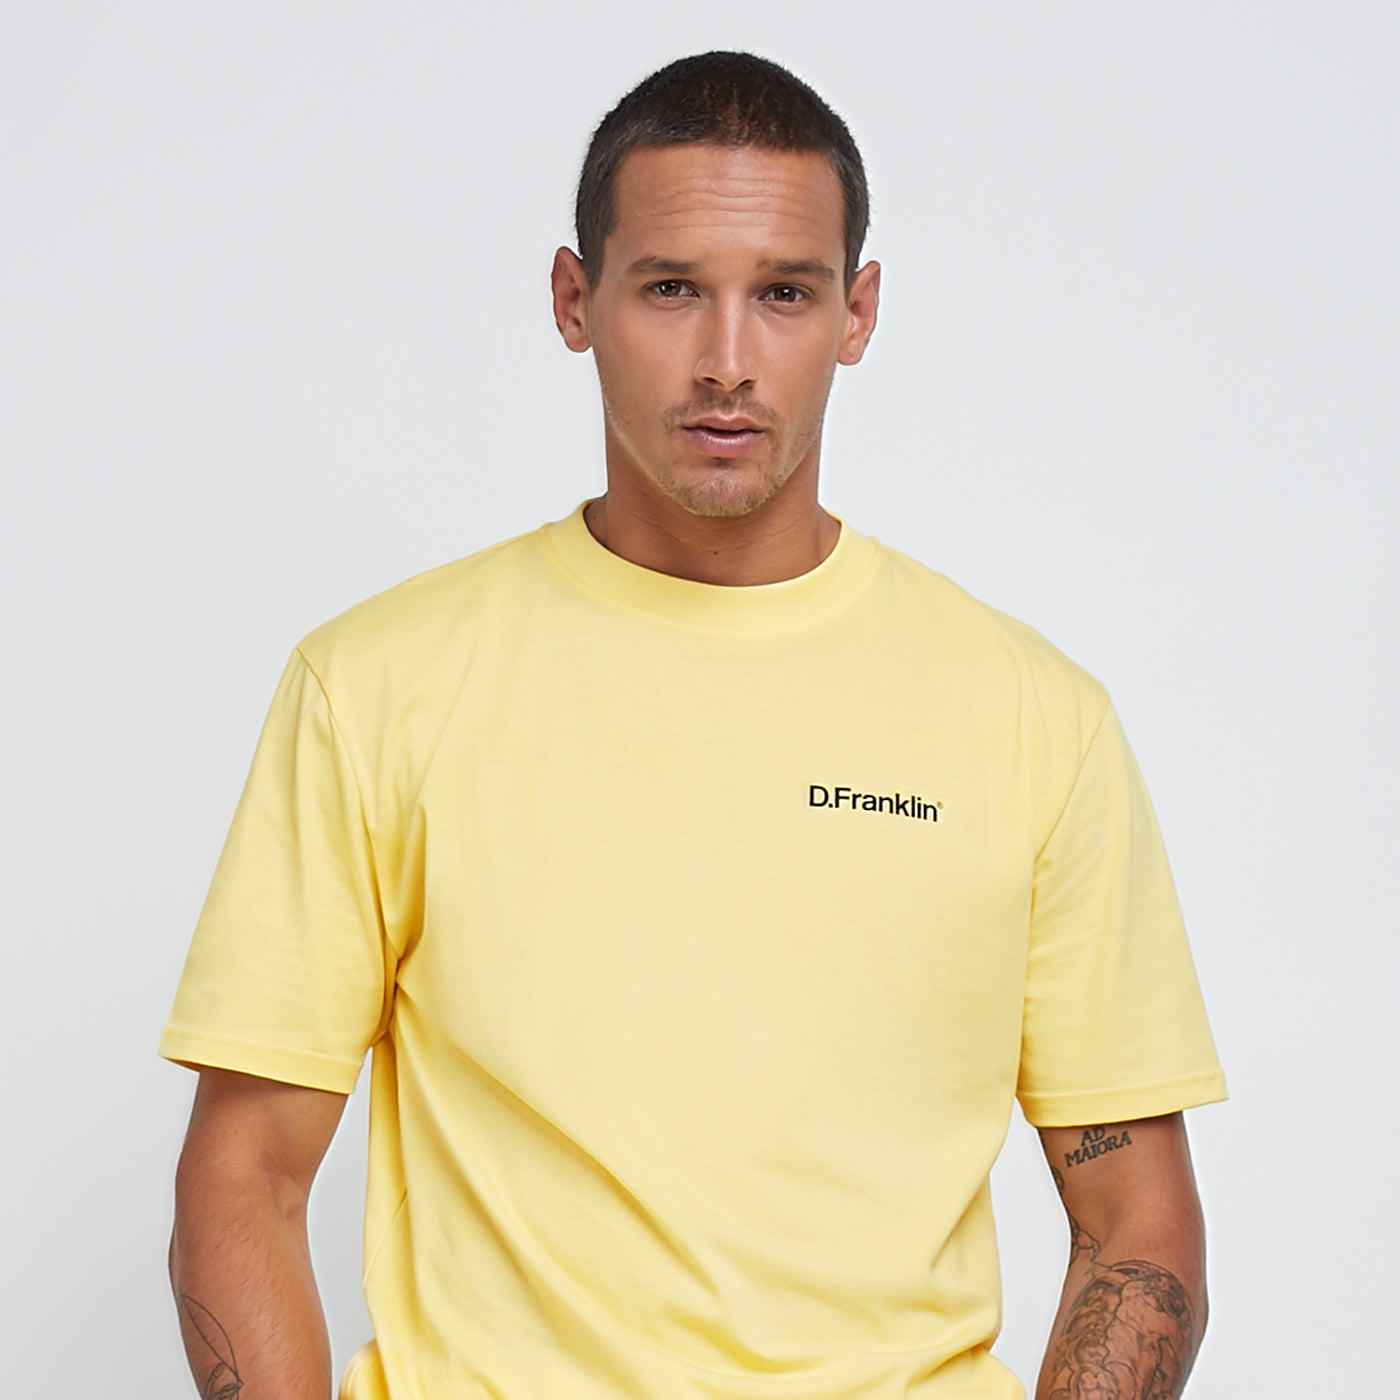 Basic T-Shirt Yellow